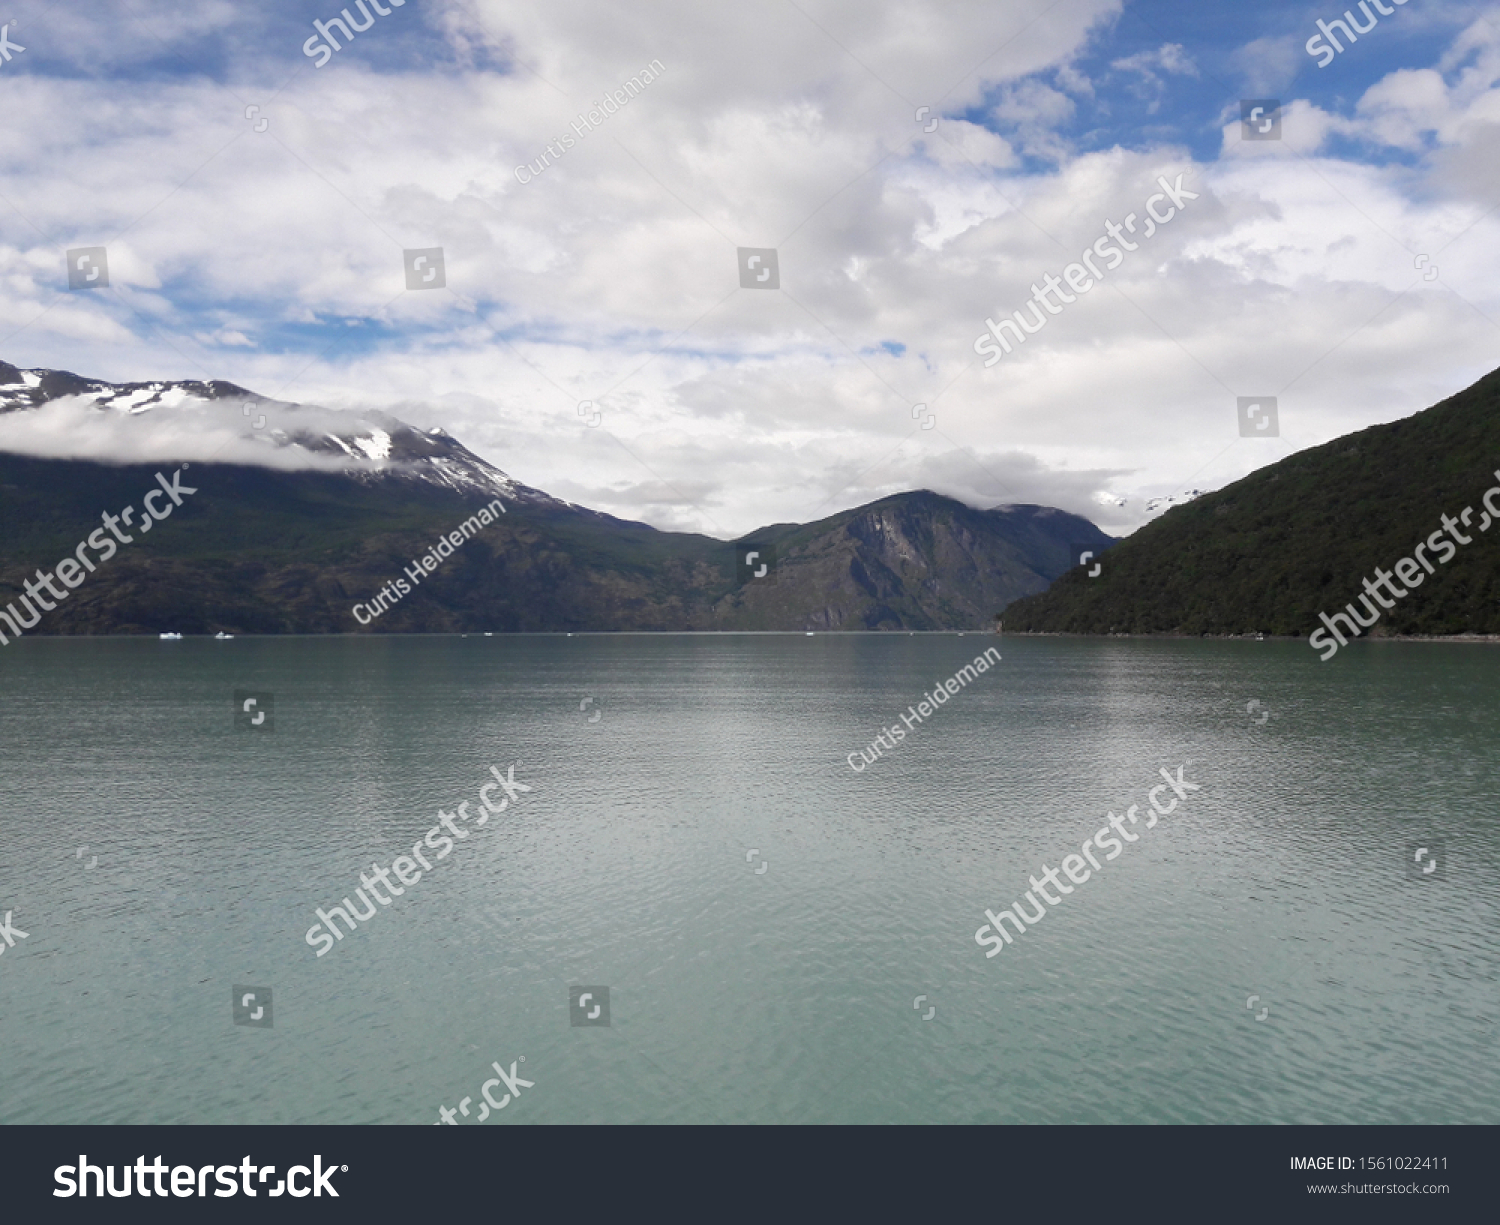 Landscape Glacier National Park Patagonia Argentina Lake Argentina mountains #1561022411